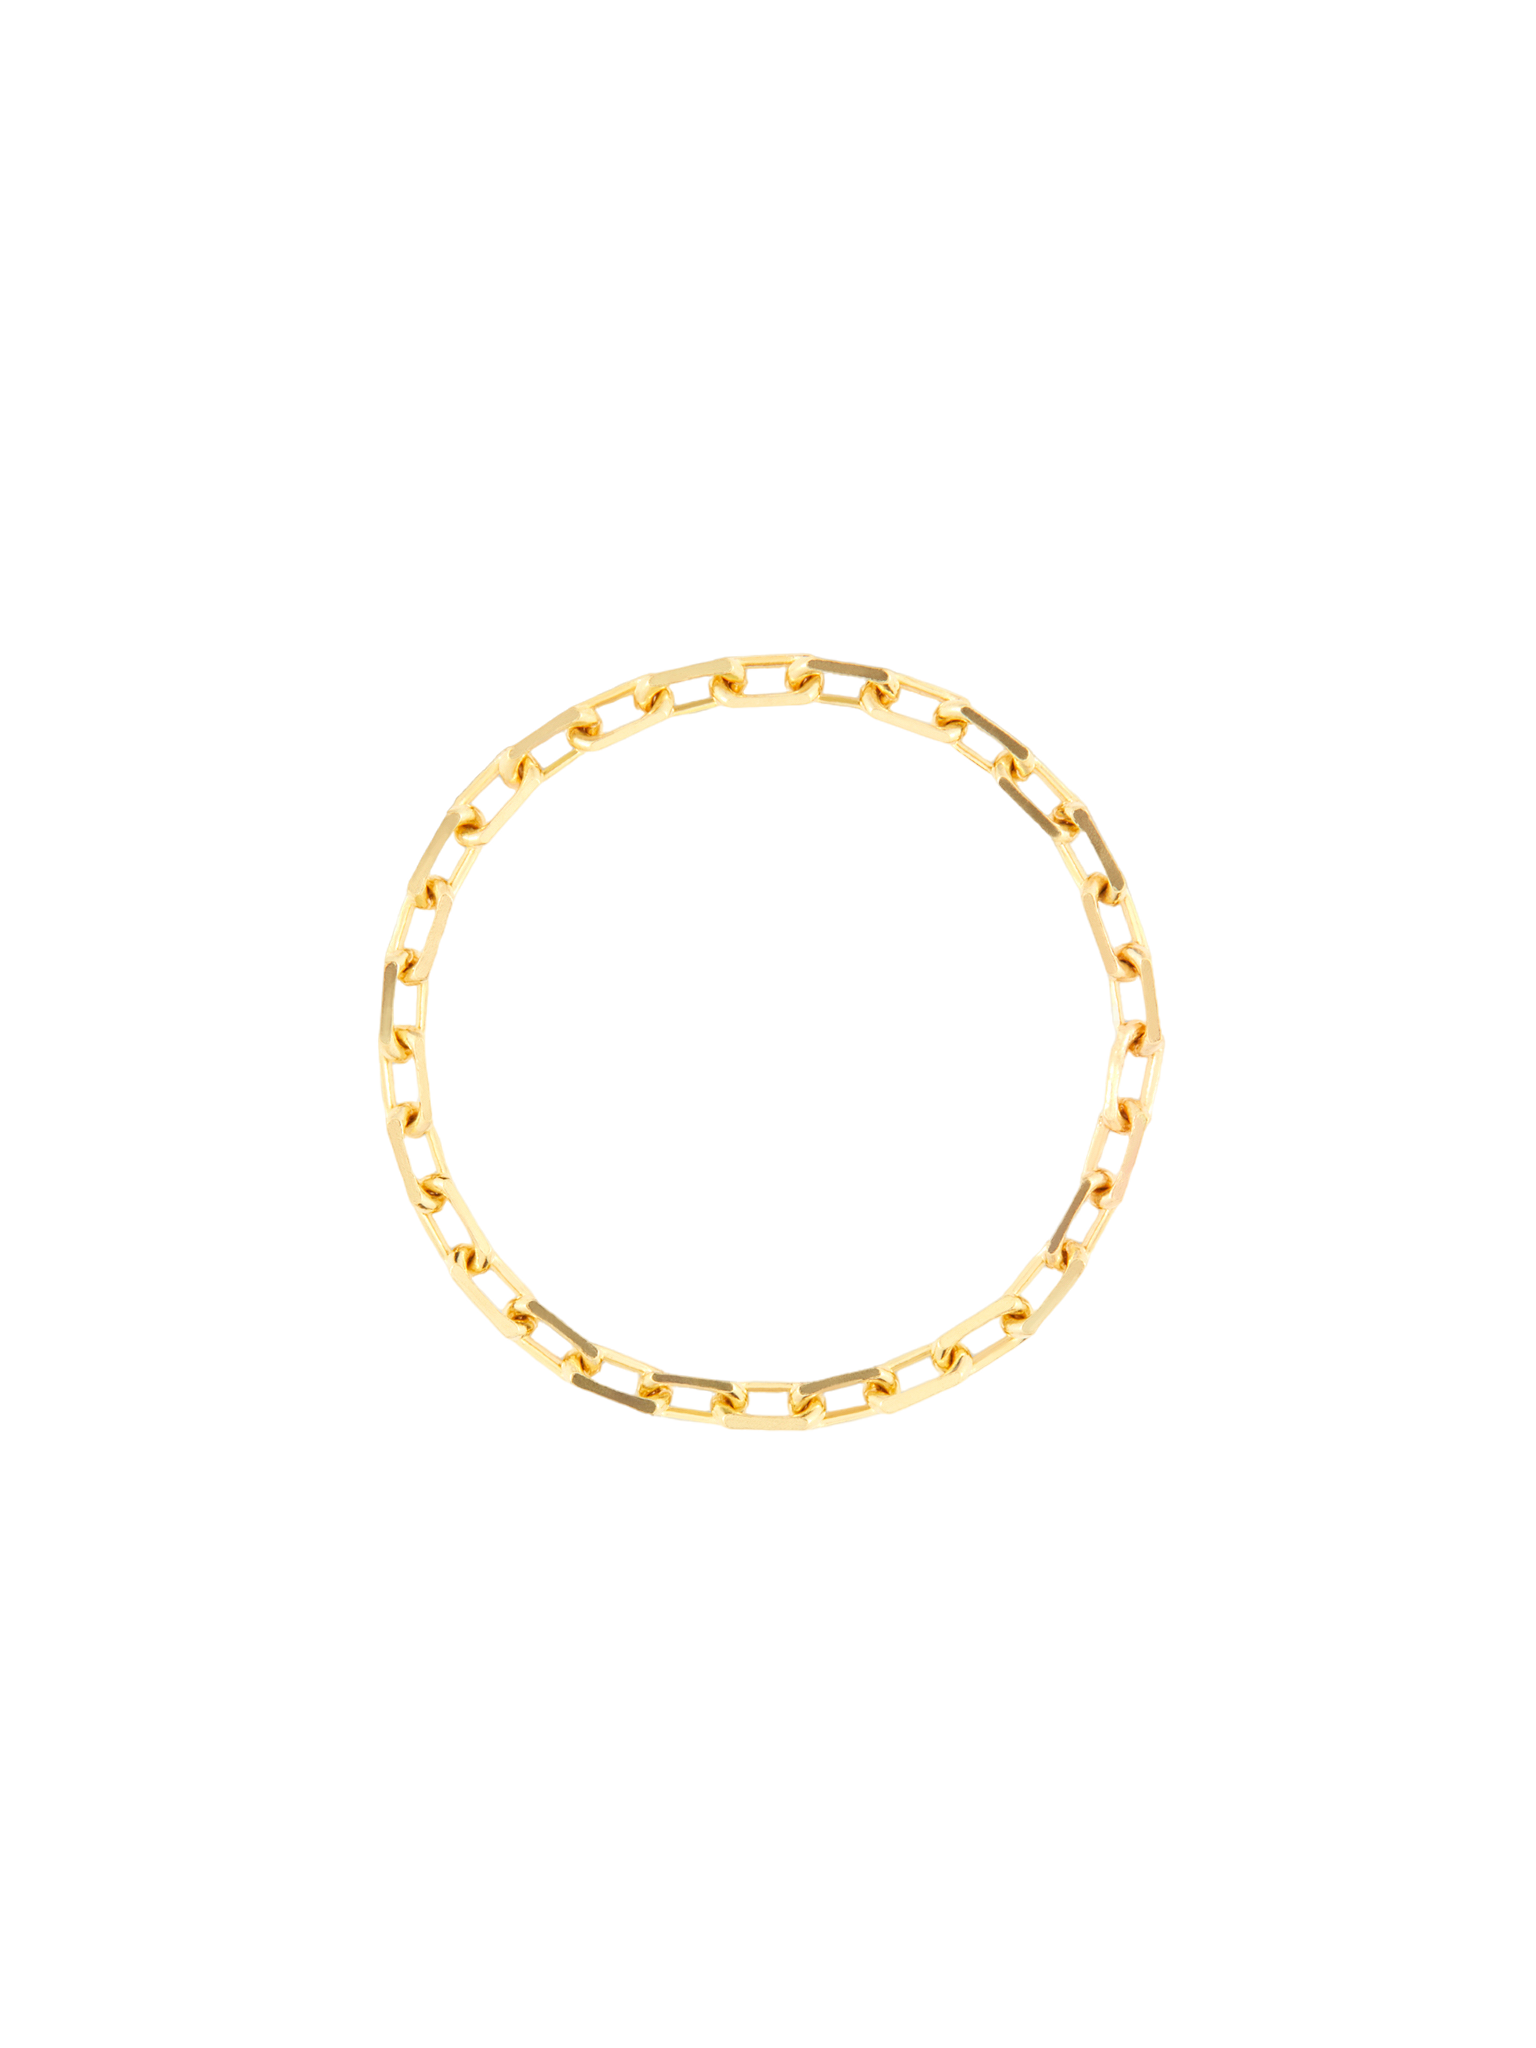 Stella chain ring